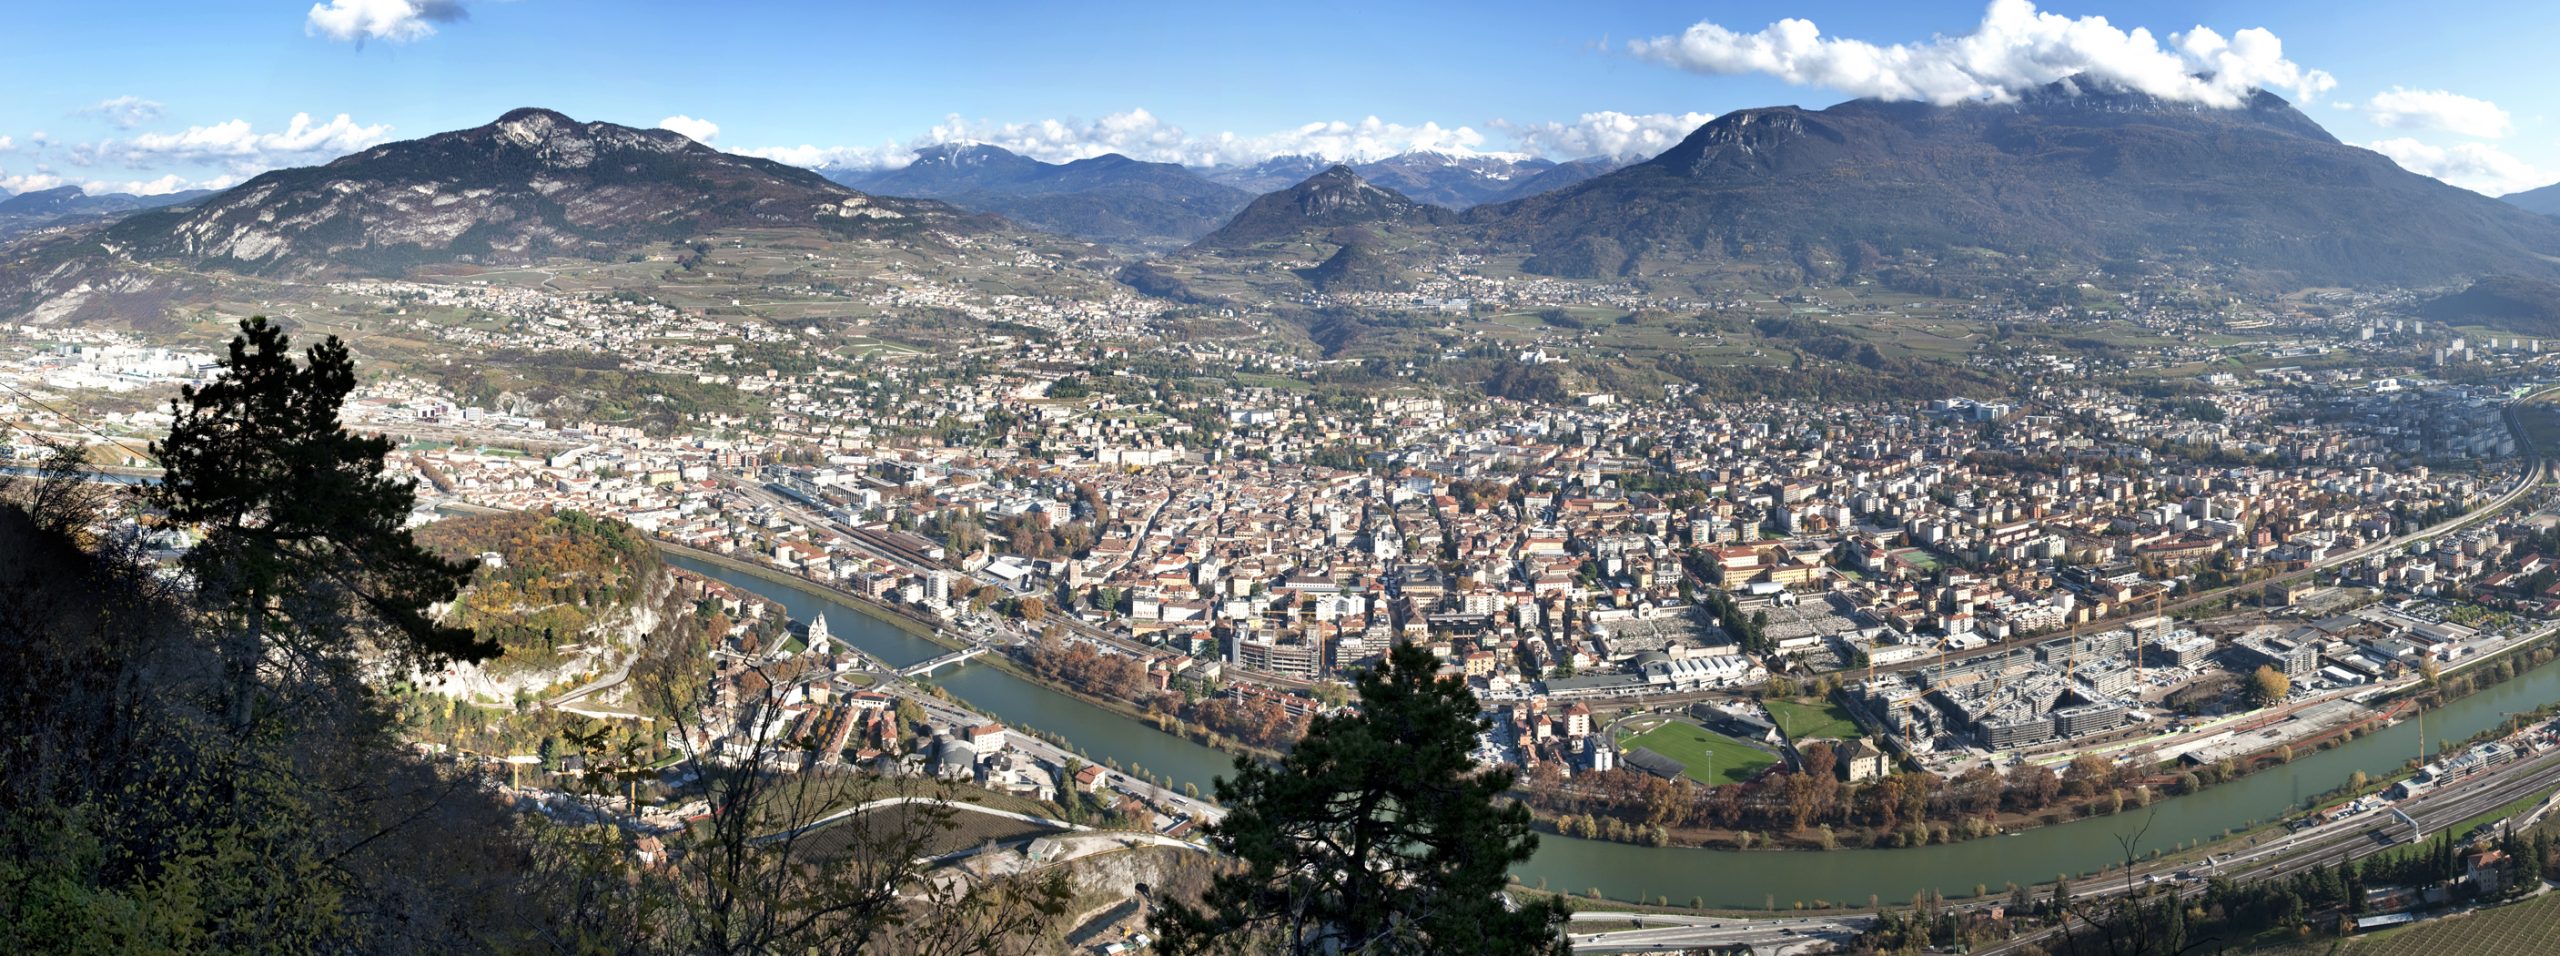 Discovering the Charm of Trento, Italy - ItalianNotebook - Italy Travel Blog